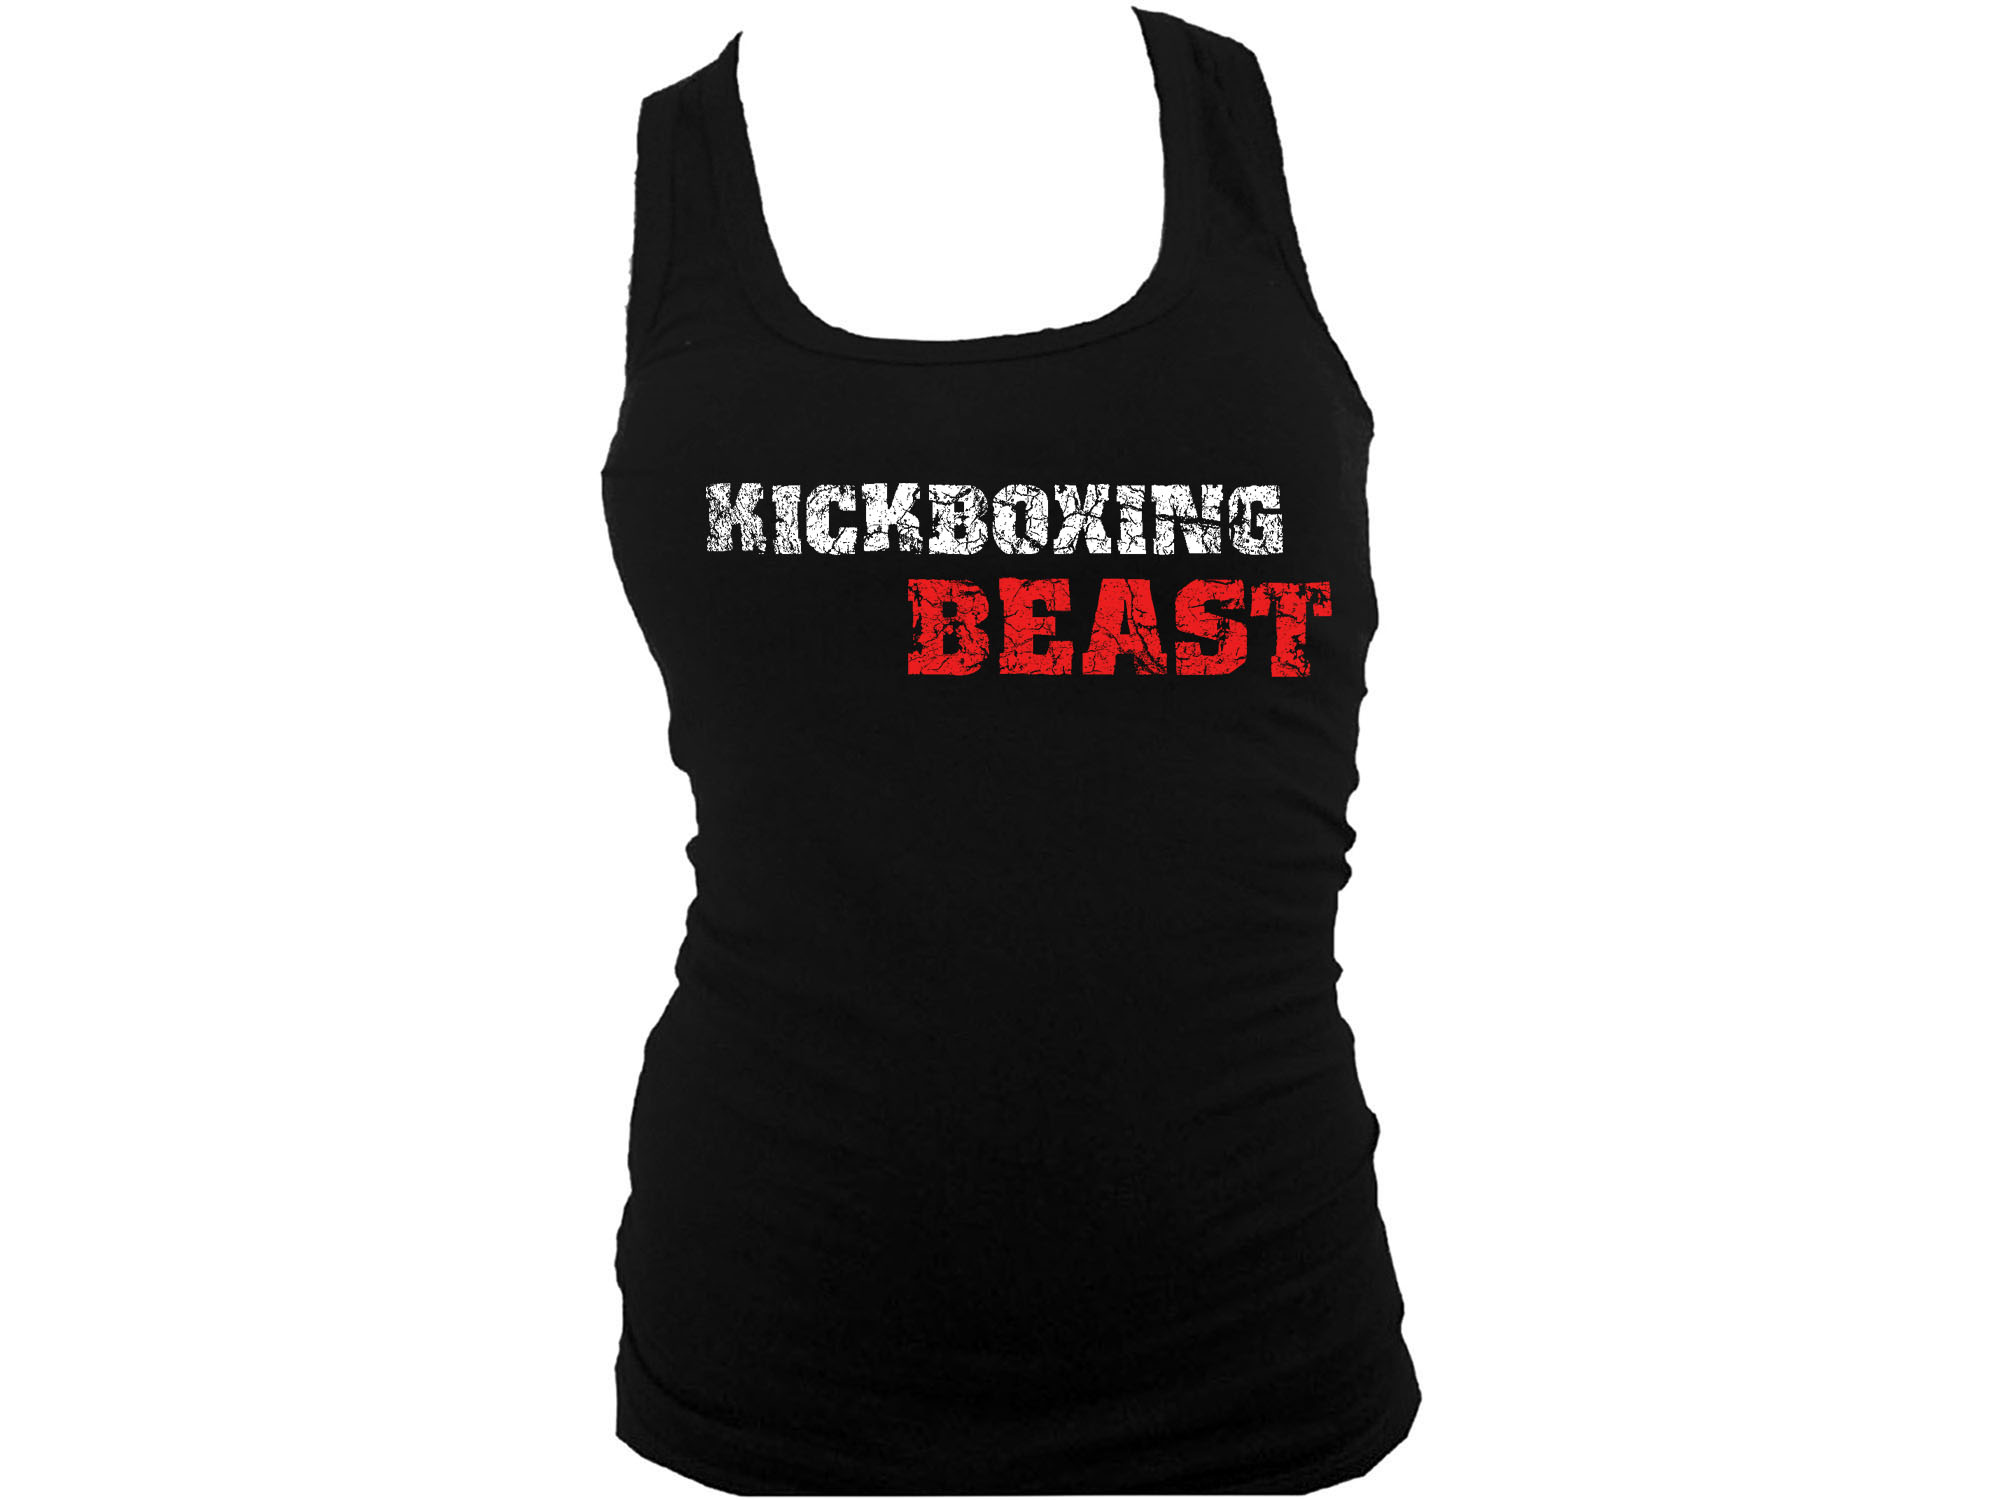 Kickboxing Beast distressed print women or teens tank top S/M